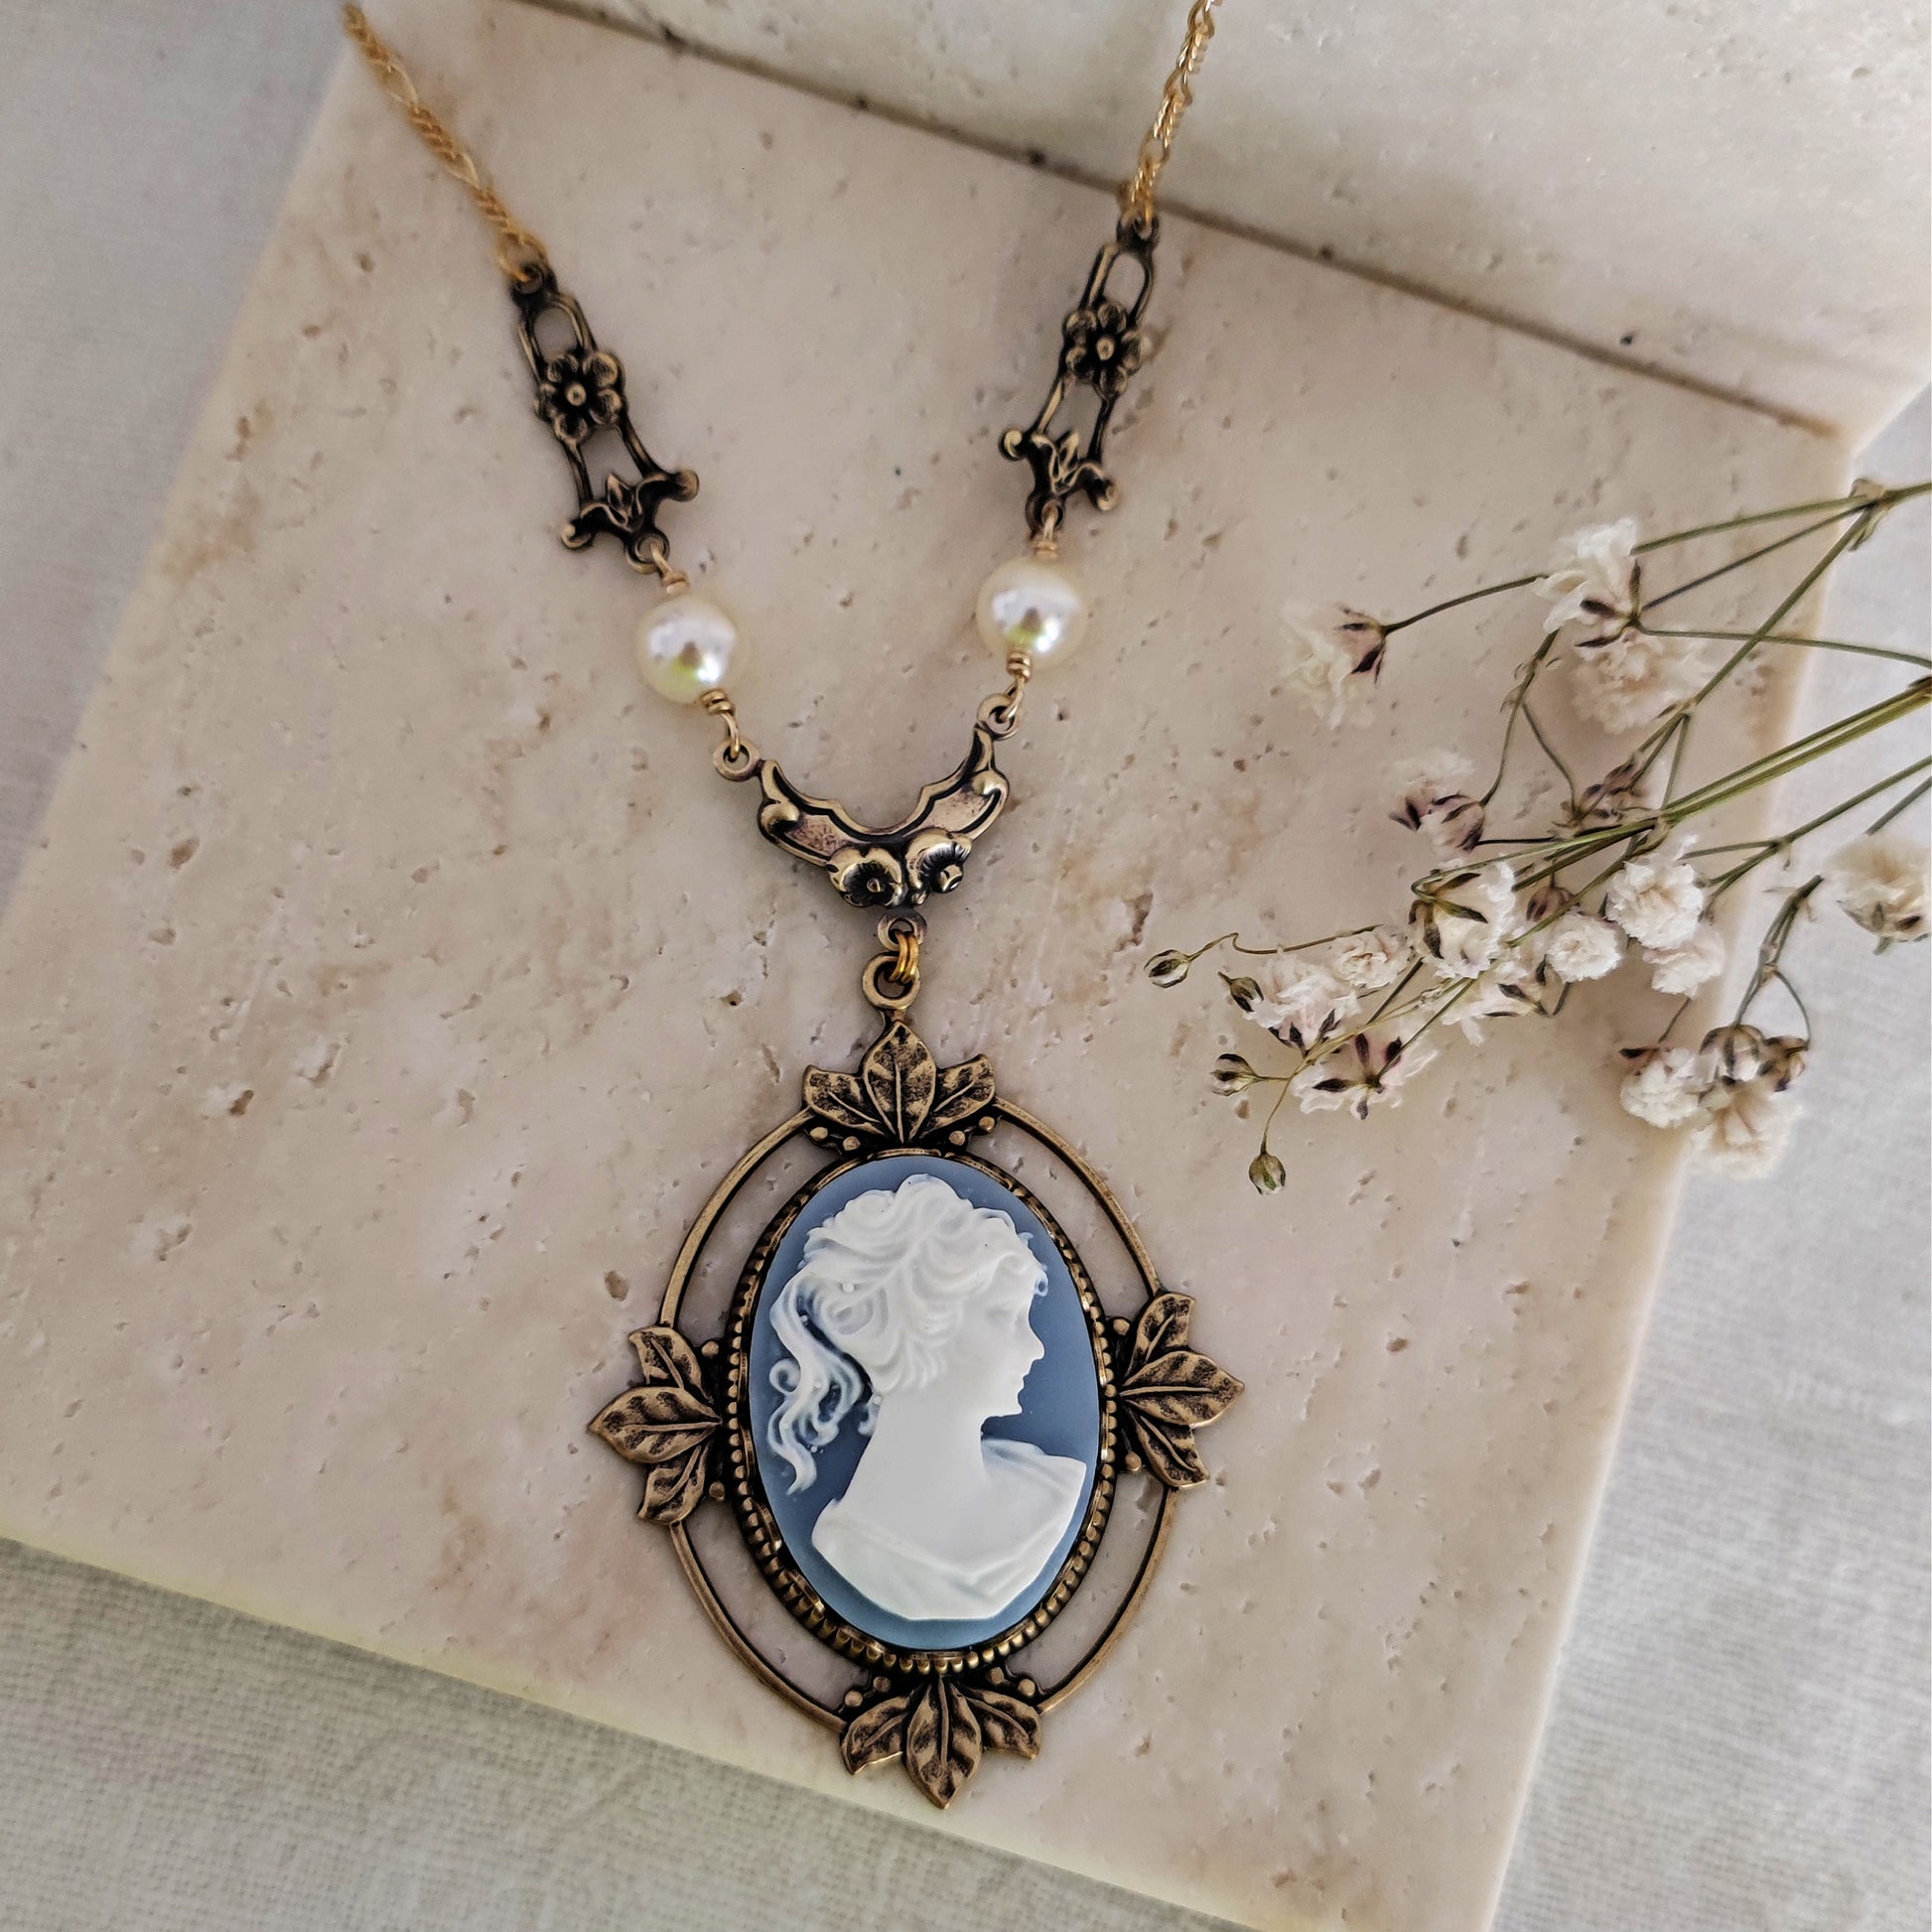 Katherine Pierce inspired Cameo Necklace – Lacchiappasognijewelry